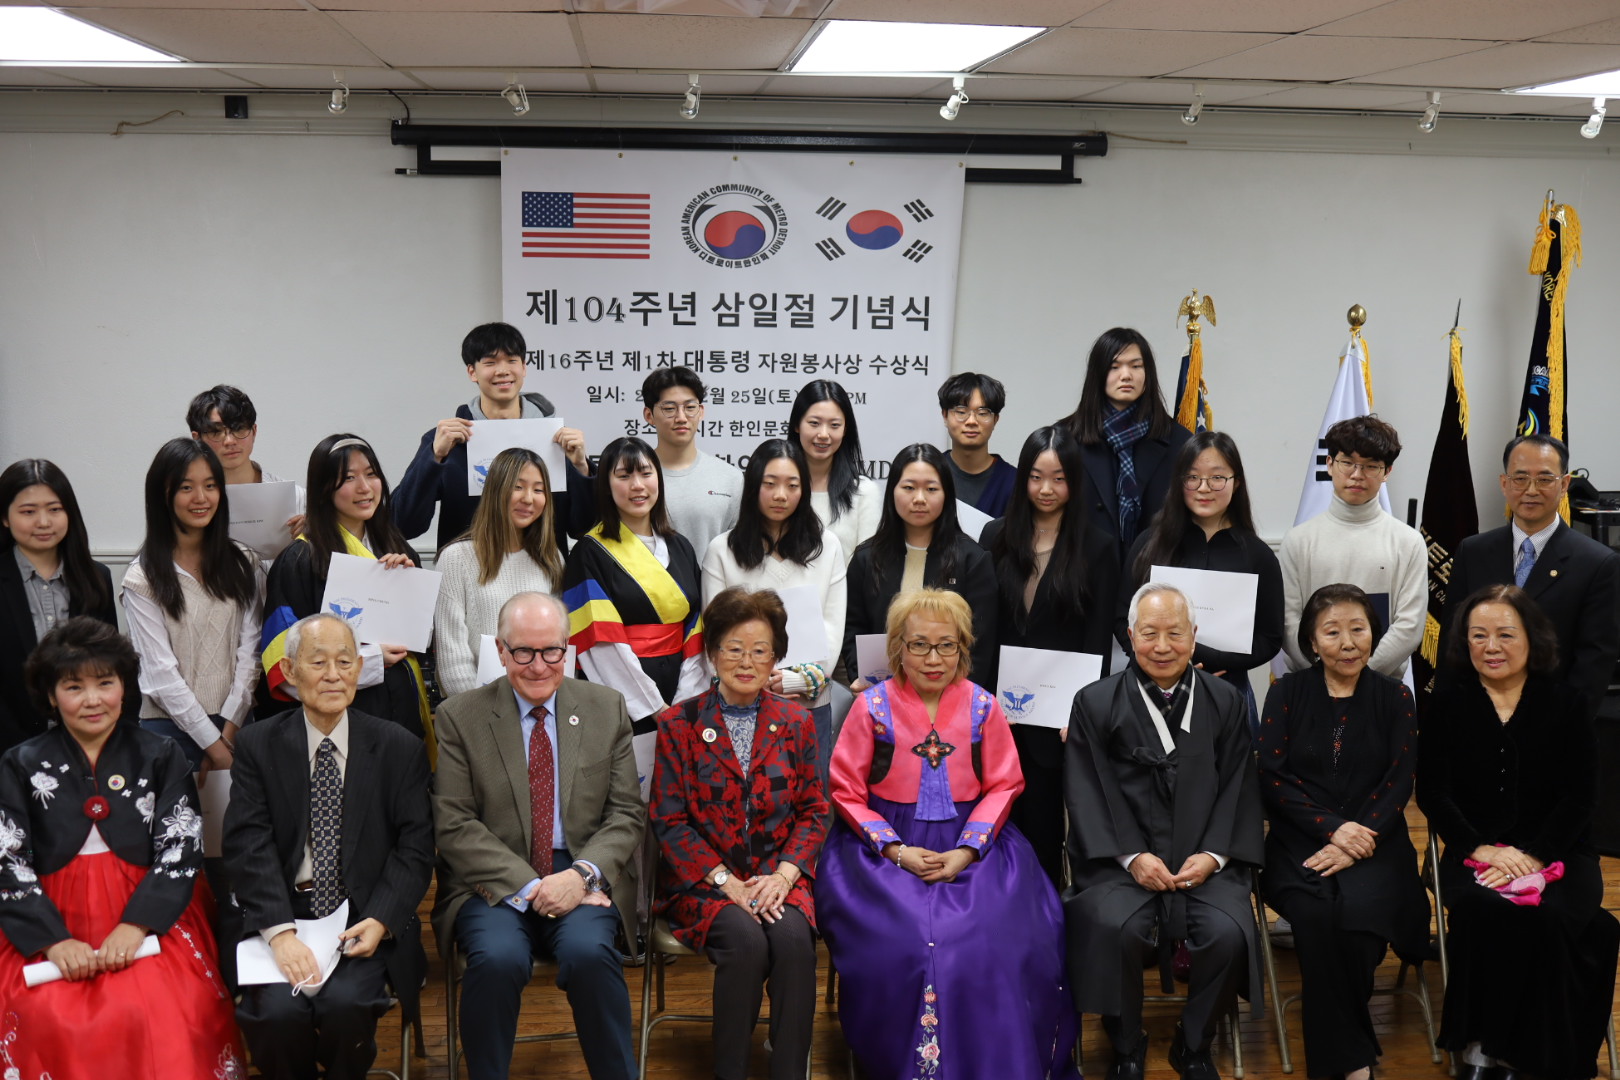 Volunteer service award recipients and members of Korean American community take ceremonial group photo on Feb. 25